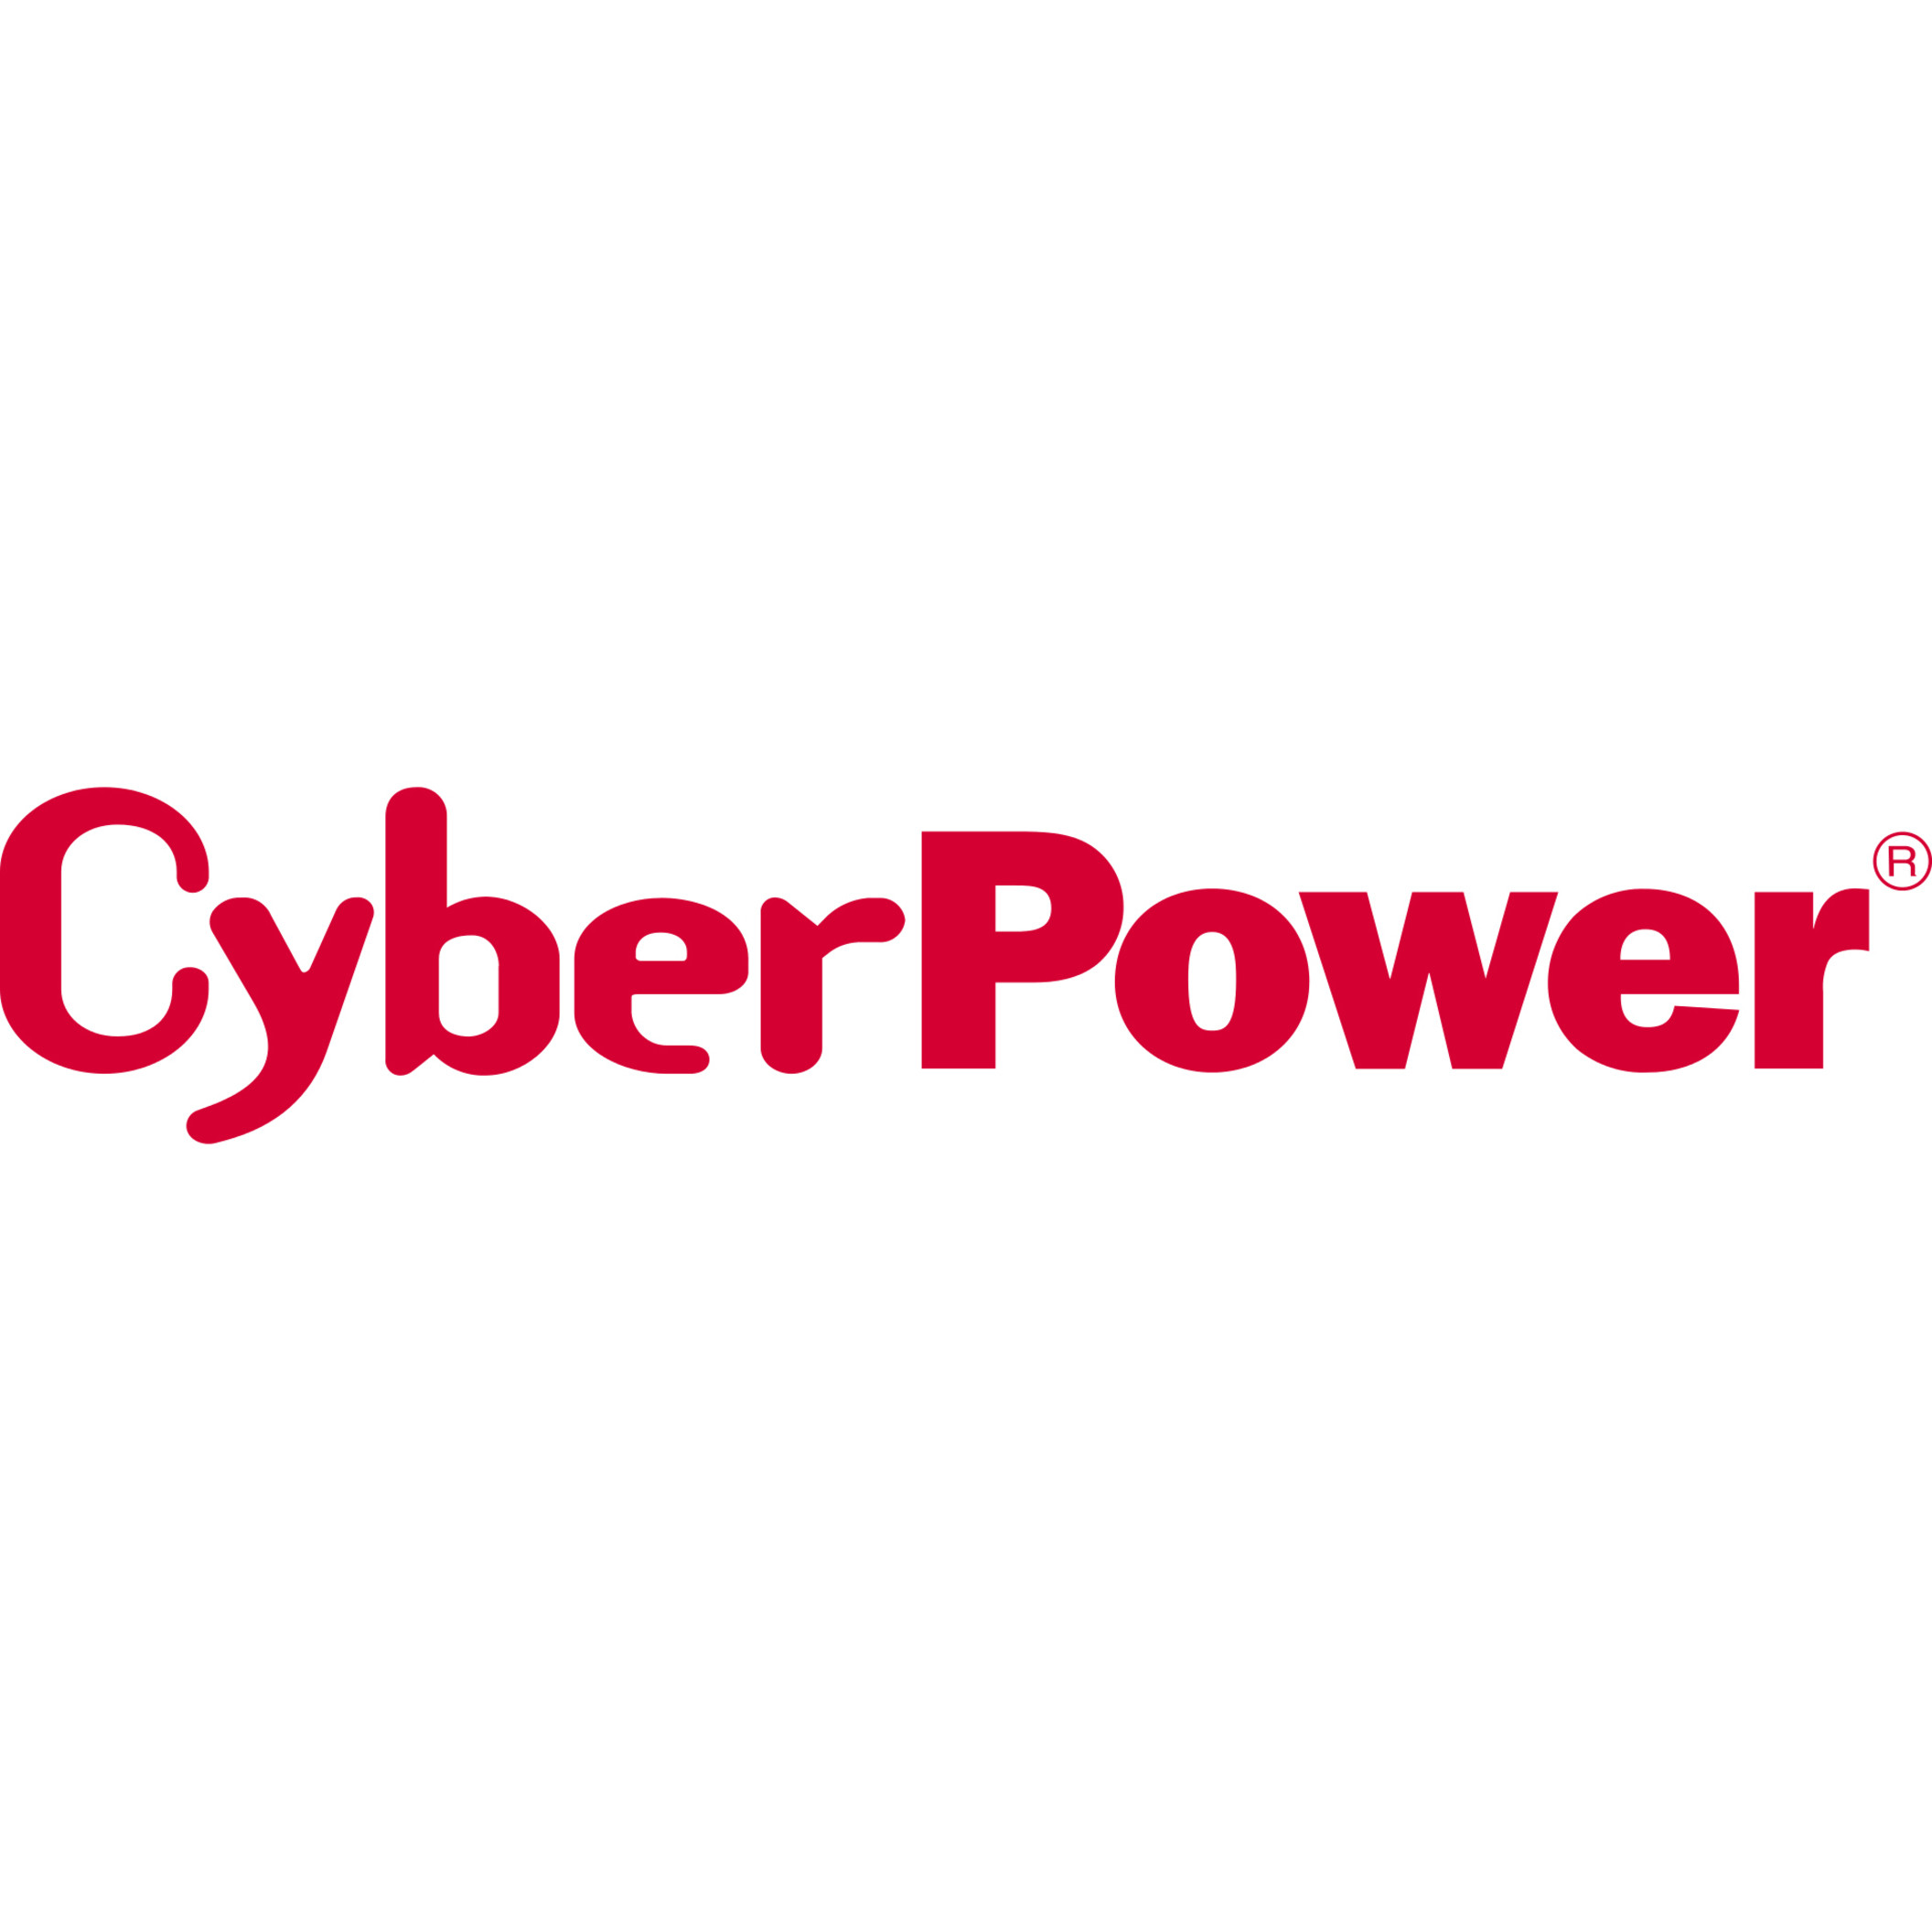 Cyber Power Panel Cloud SoftwareLicense100 Nodes (UPS) LicensePrice Level 3 PPCLOUDL3